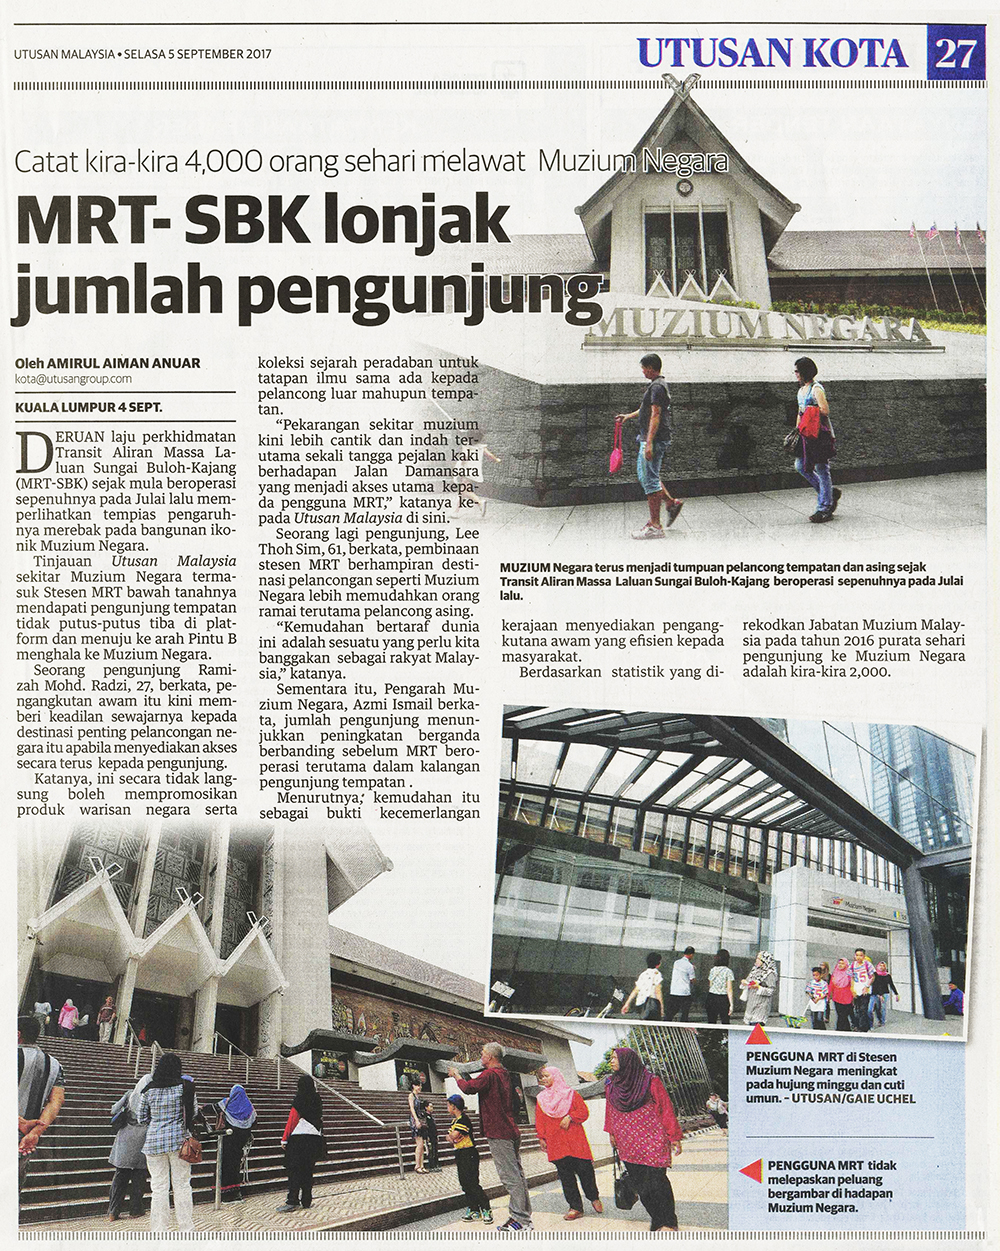 MRT-SBK Lonjak Jumlah Pengunjung